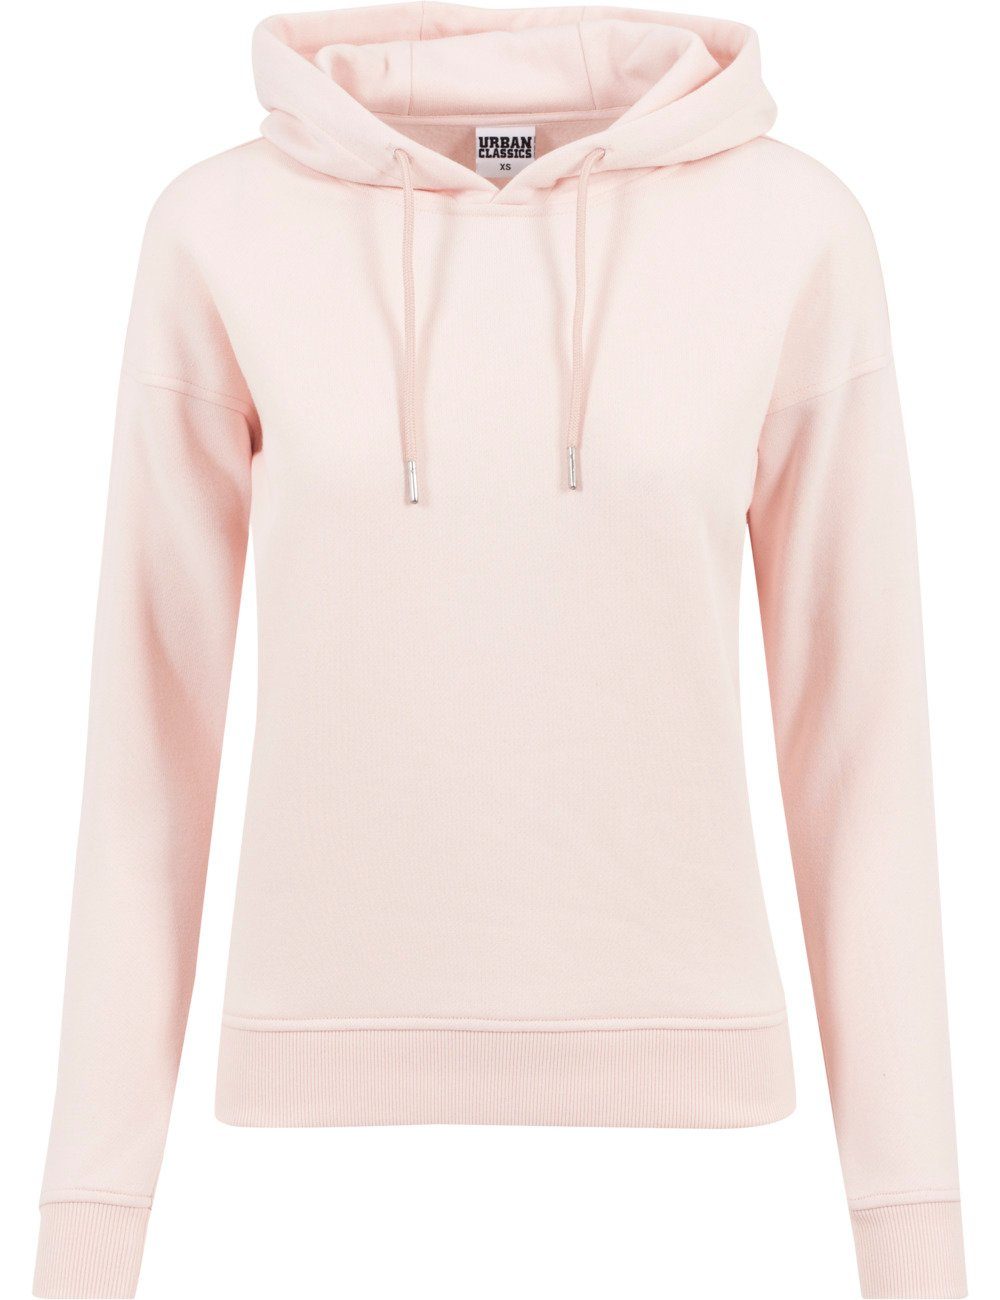 Sweater Hoody CLASSICS URBAN Pink (20185) Kapuzenpullover Kapuze mit